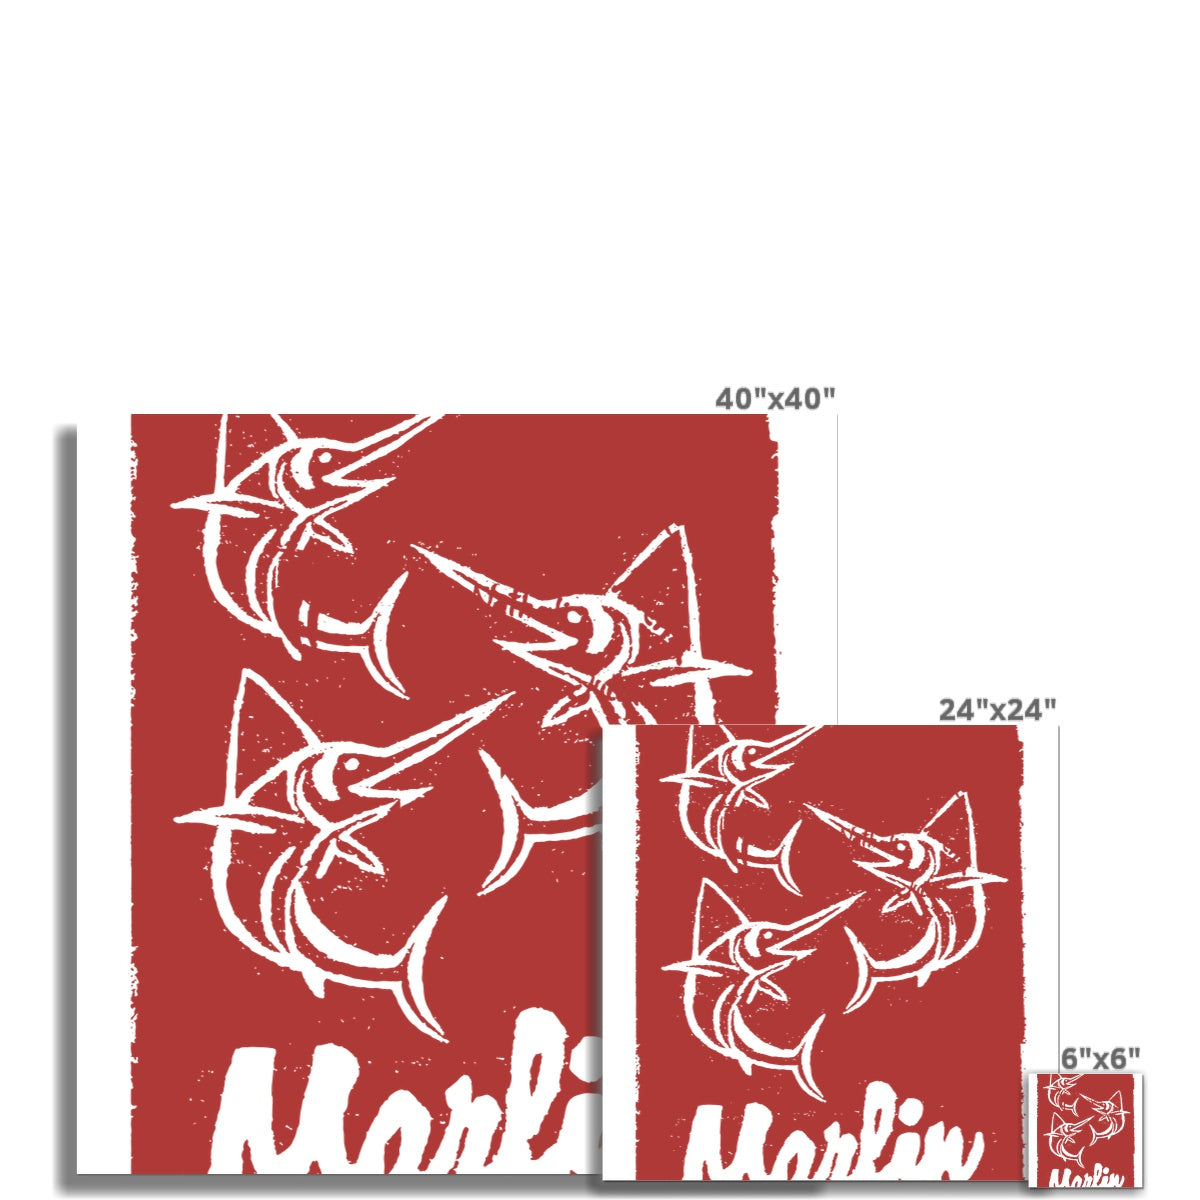 AQUA HMP2 - 07 - Marlin - Gerollte Öko-Leinwand